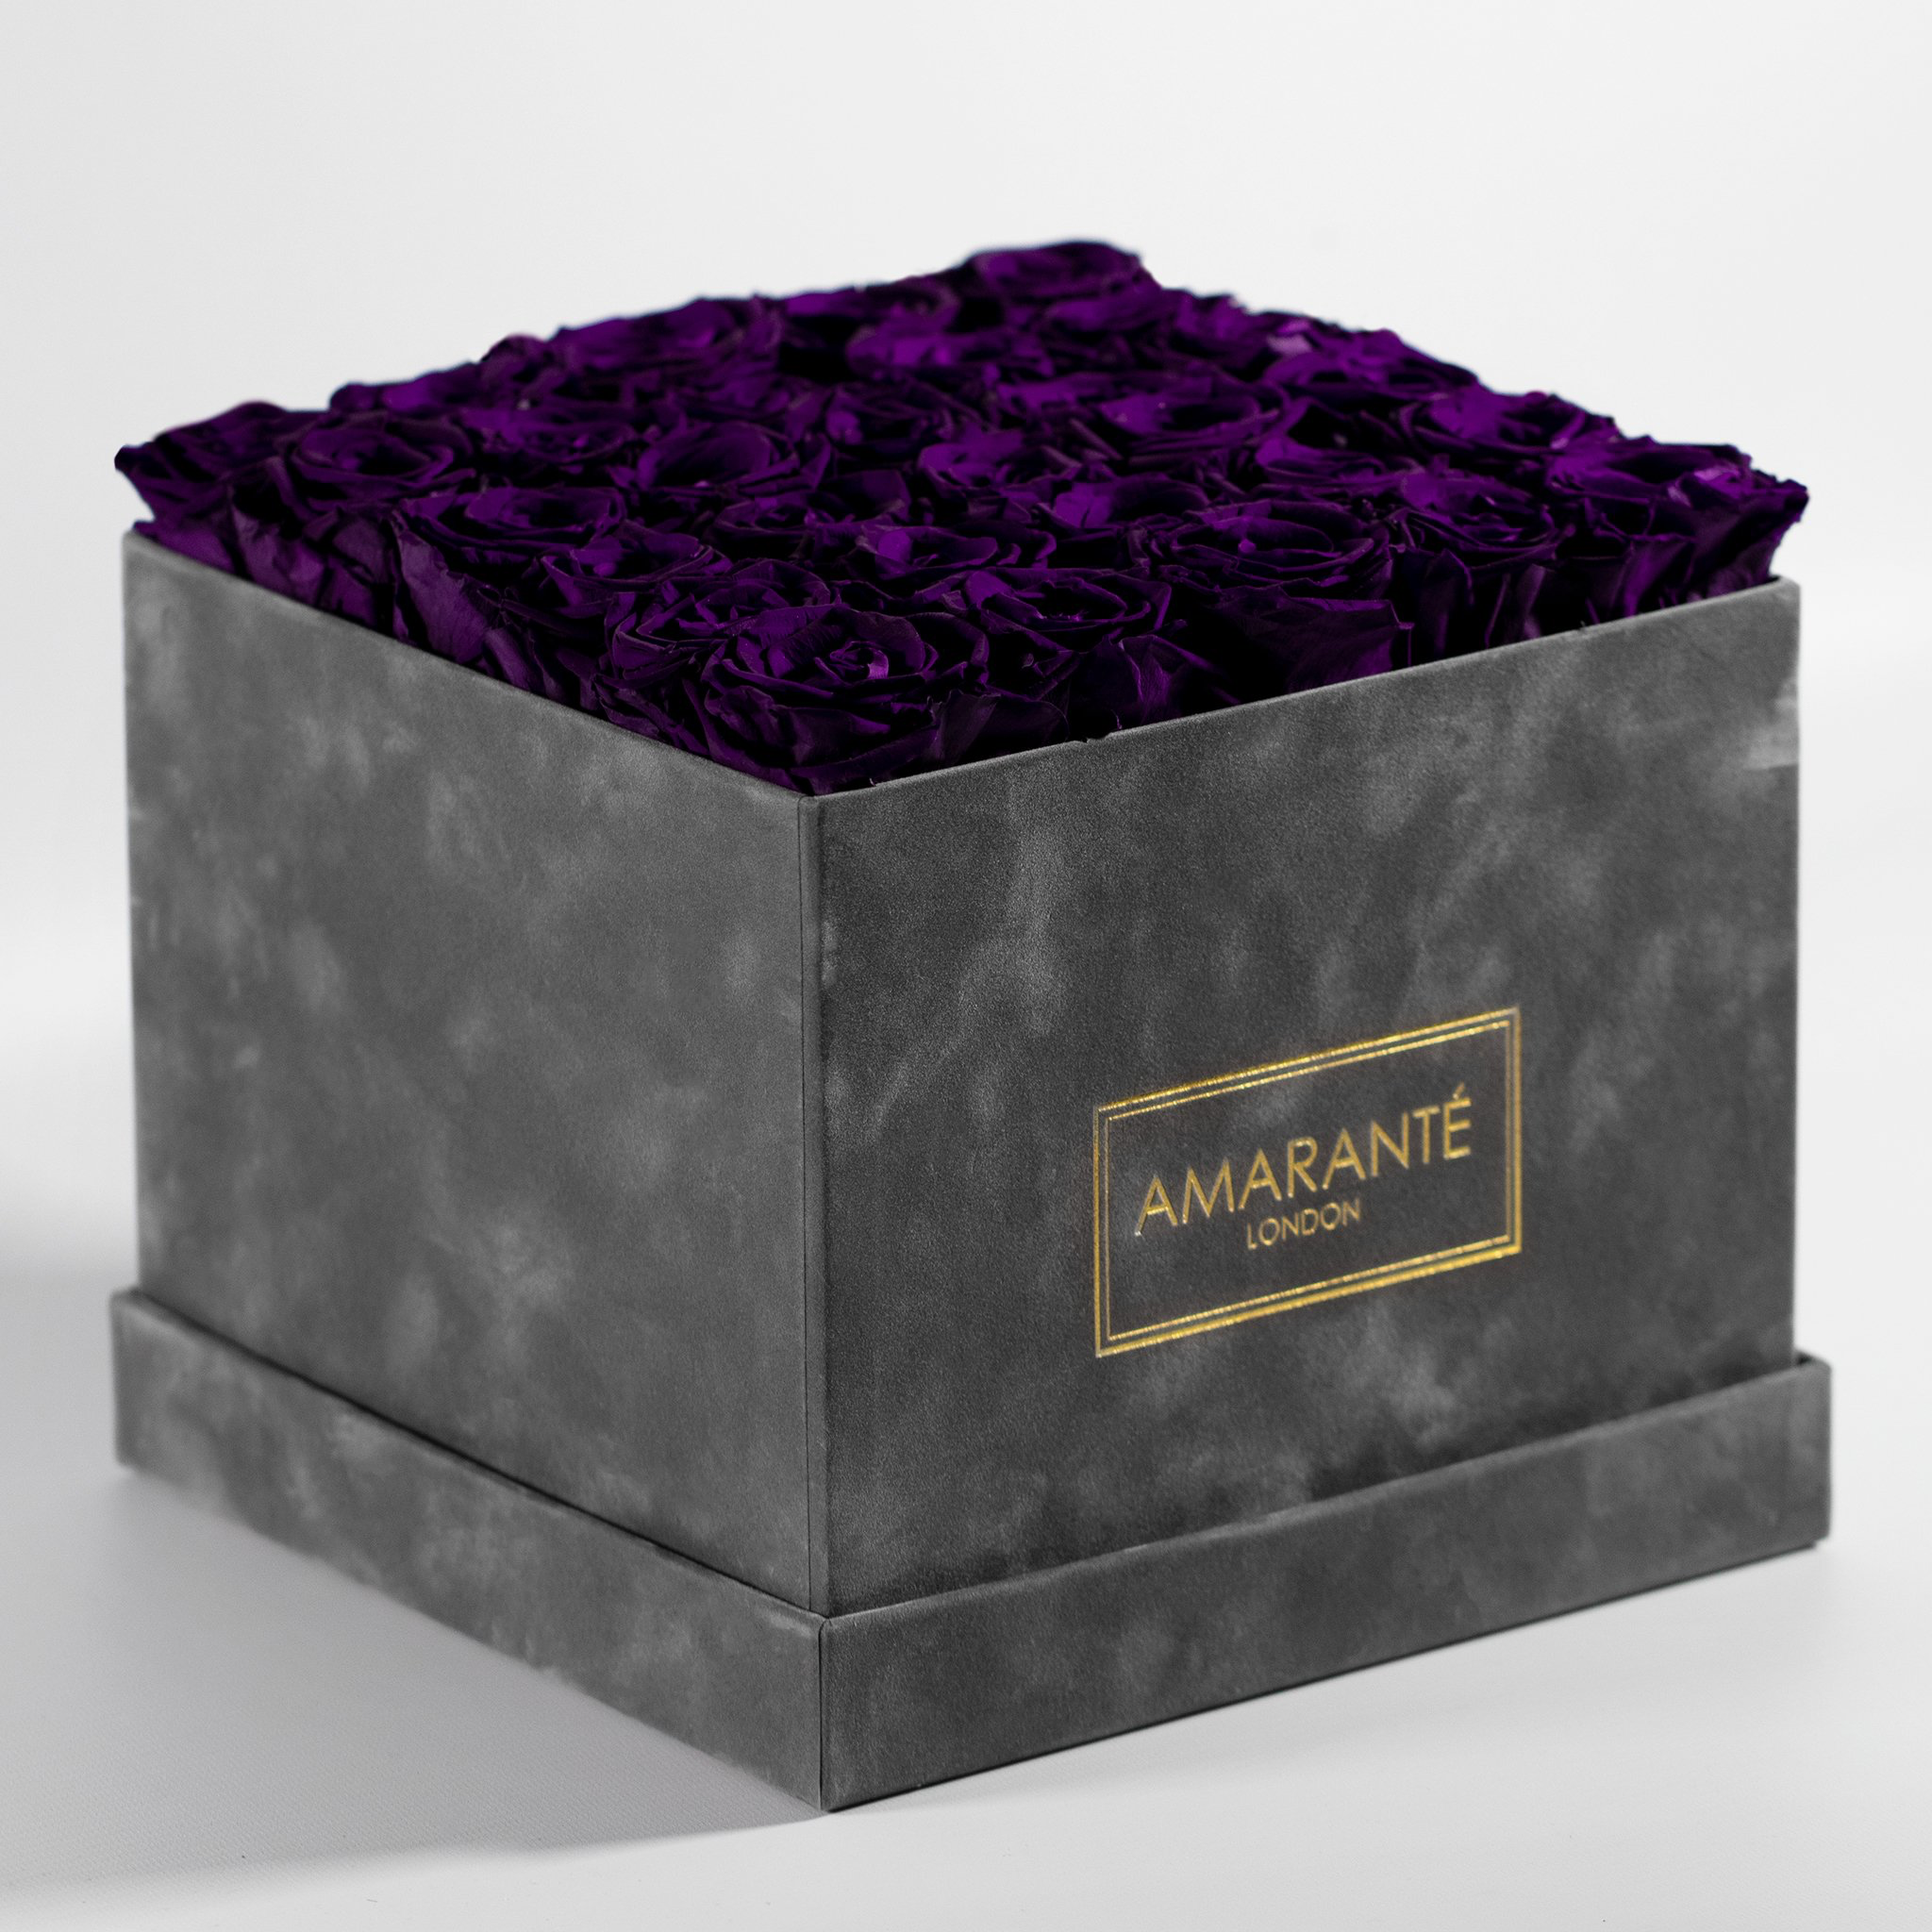 Magical dark purple Roses in an divine grey large box 